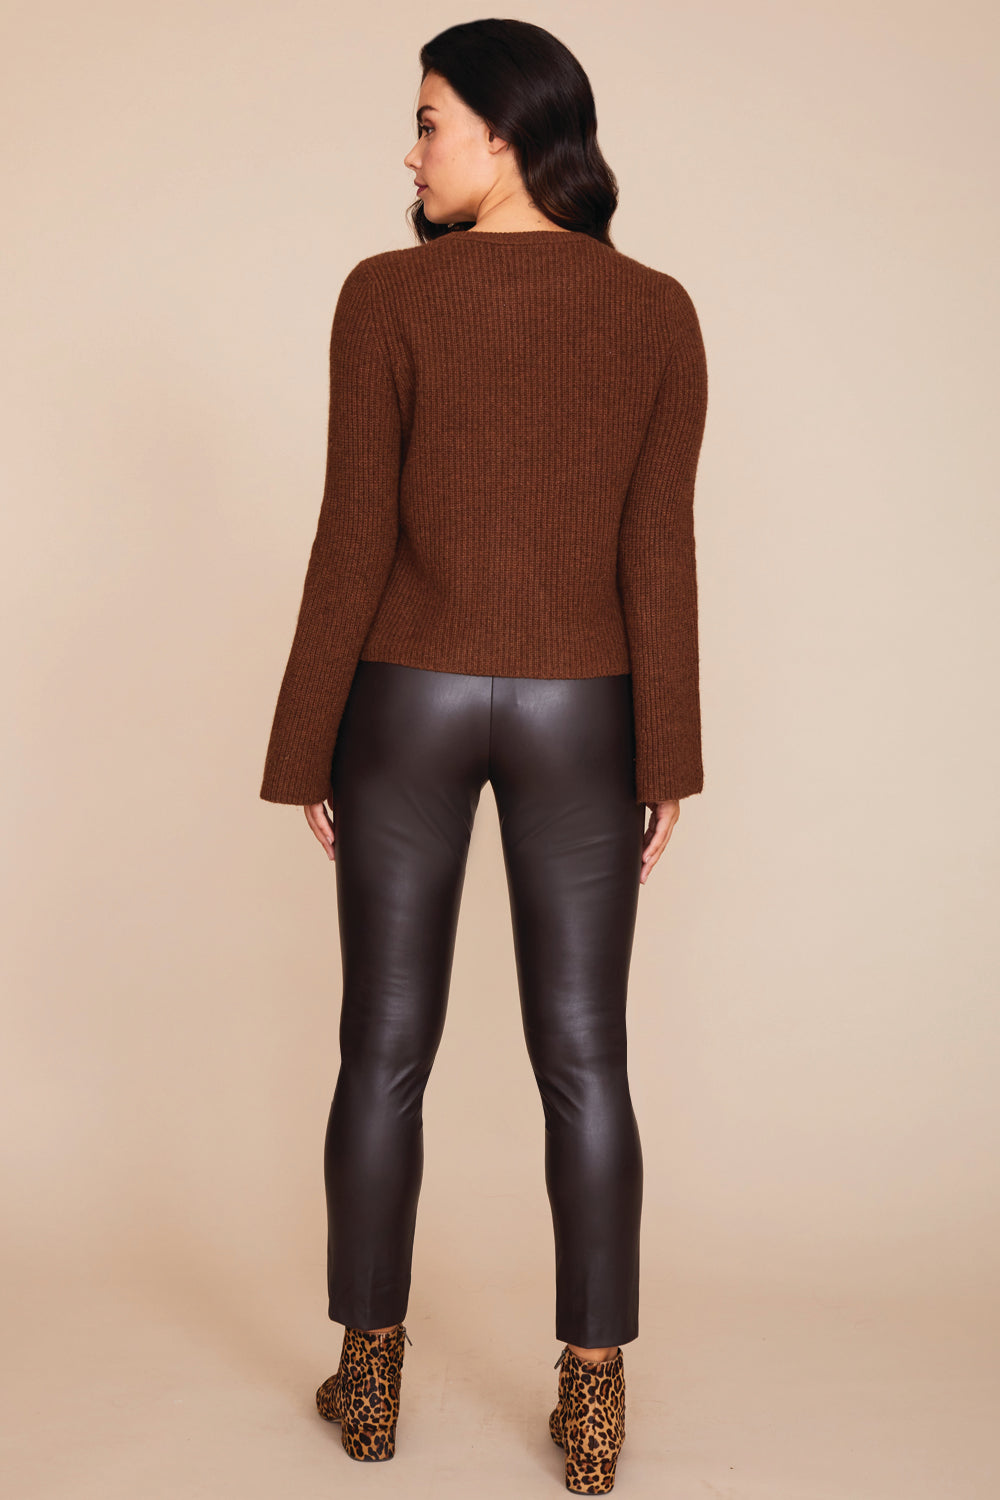 Sloane Pant - Faux Leather